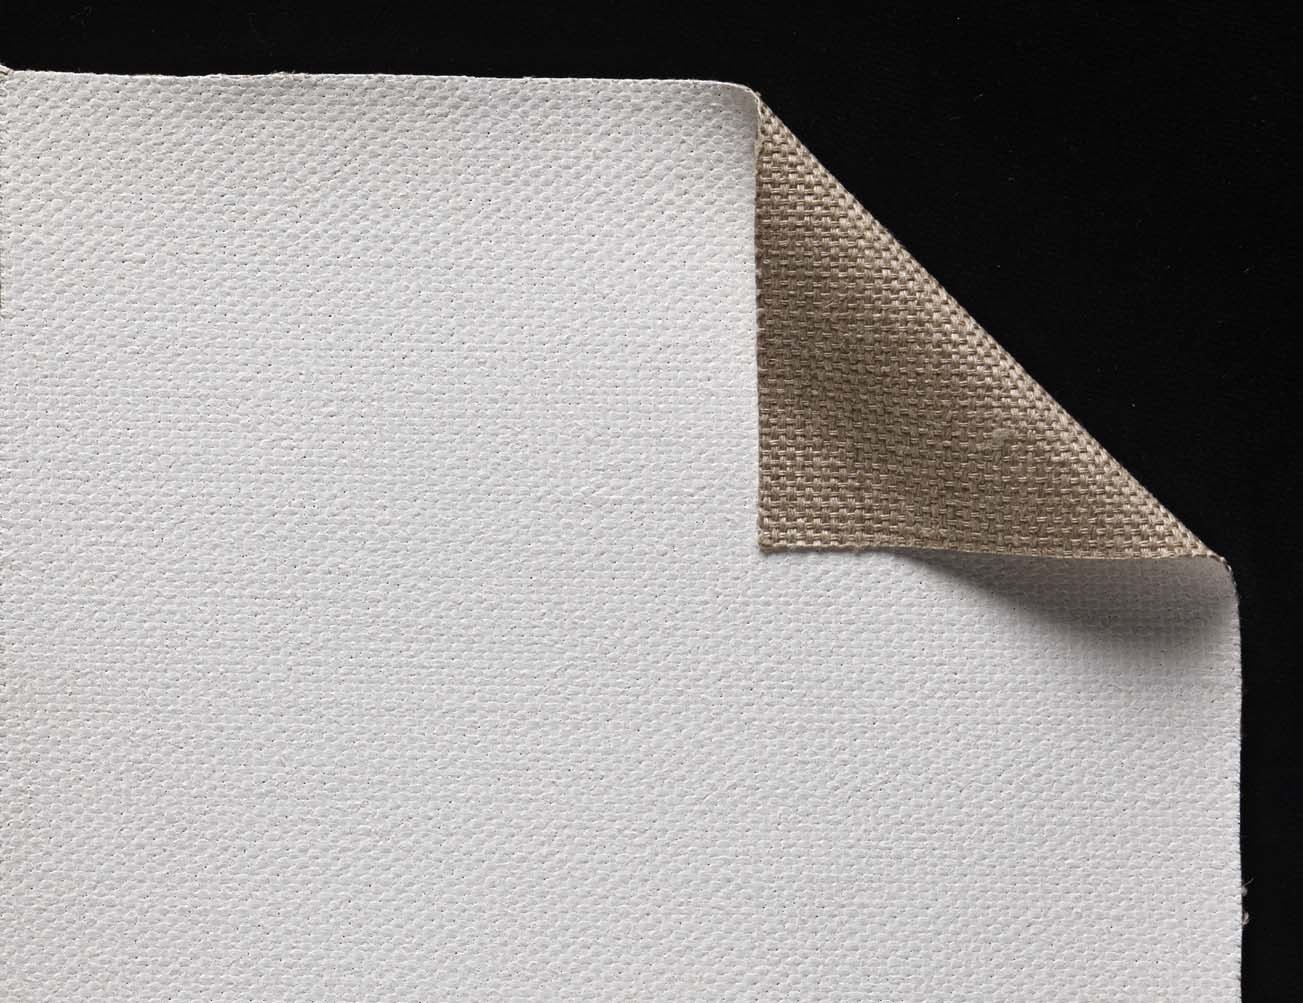 CLAESSENS 229 Absorbent primed linen 600 g/m² white, 2.10 m width, coarse